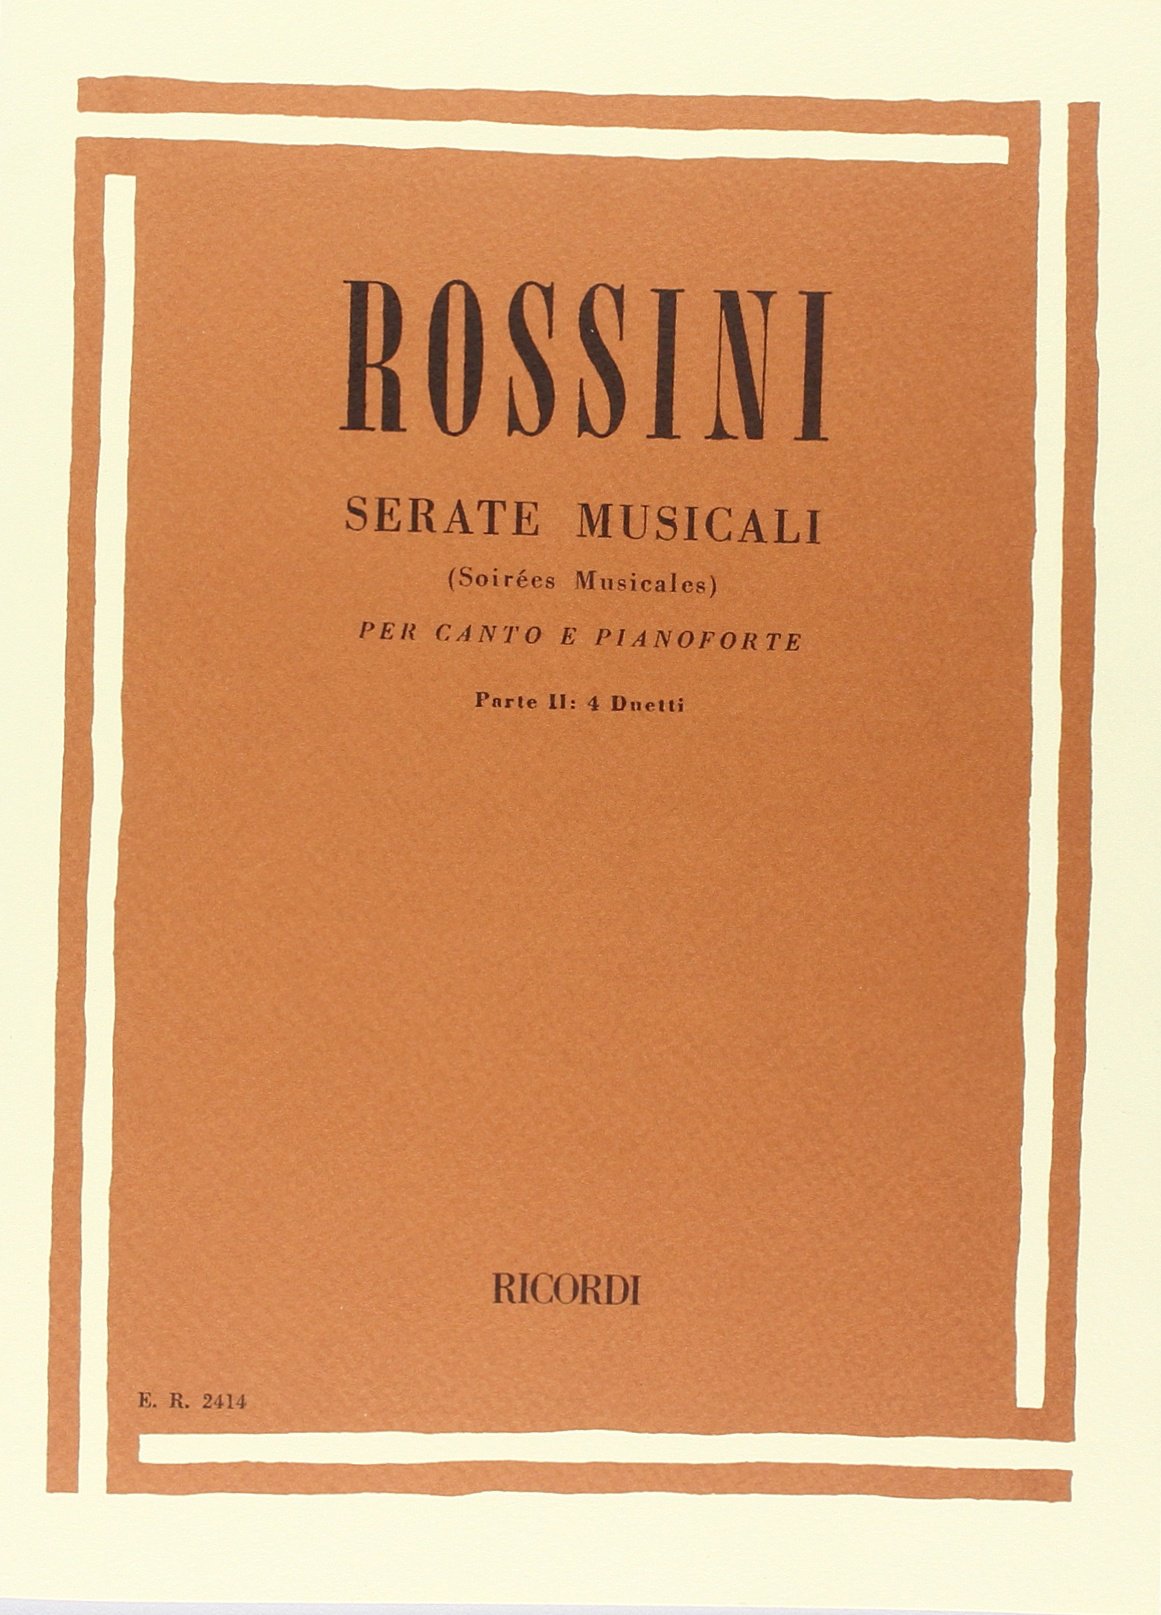 Rossini Soirees Musicales Vol 2 (4 Duetti) Sheet Music Songbook